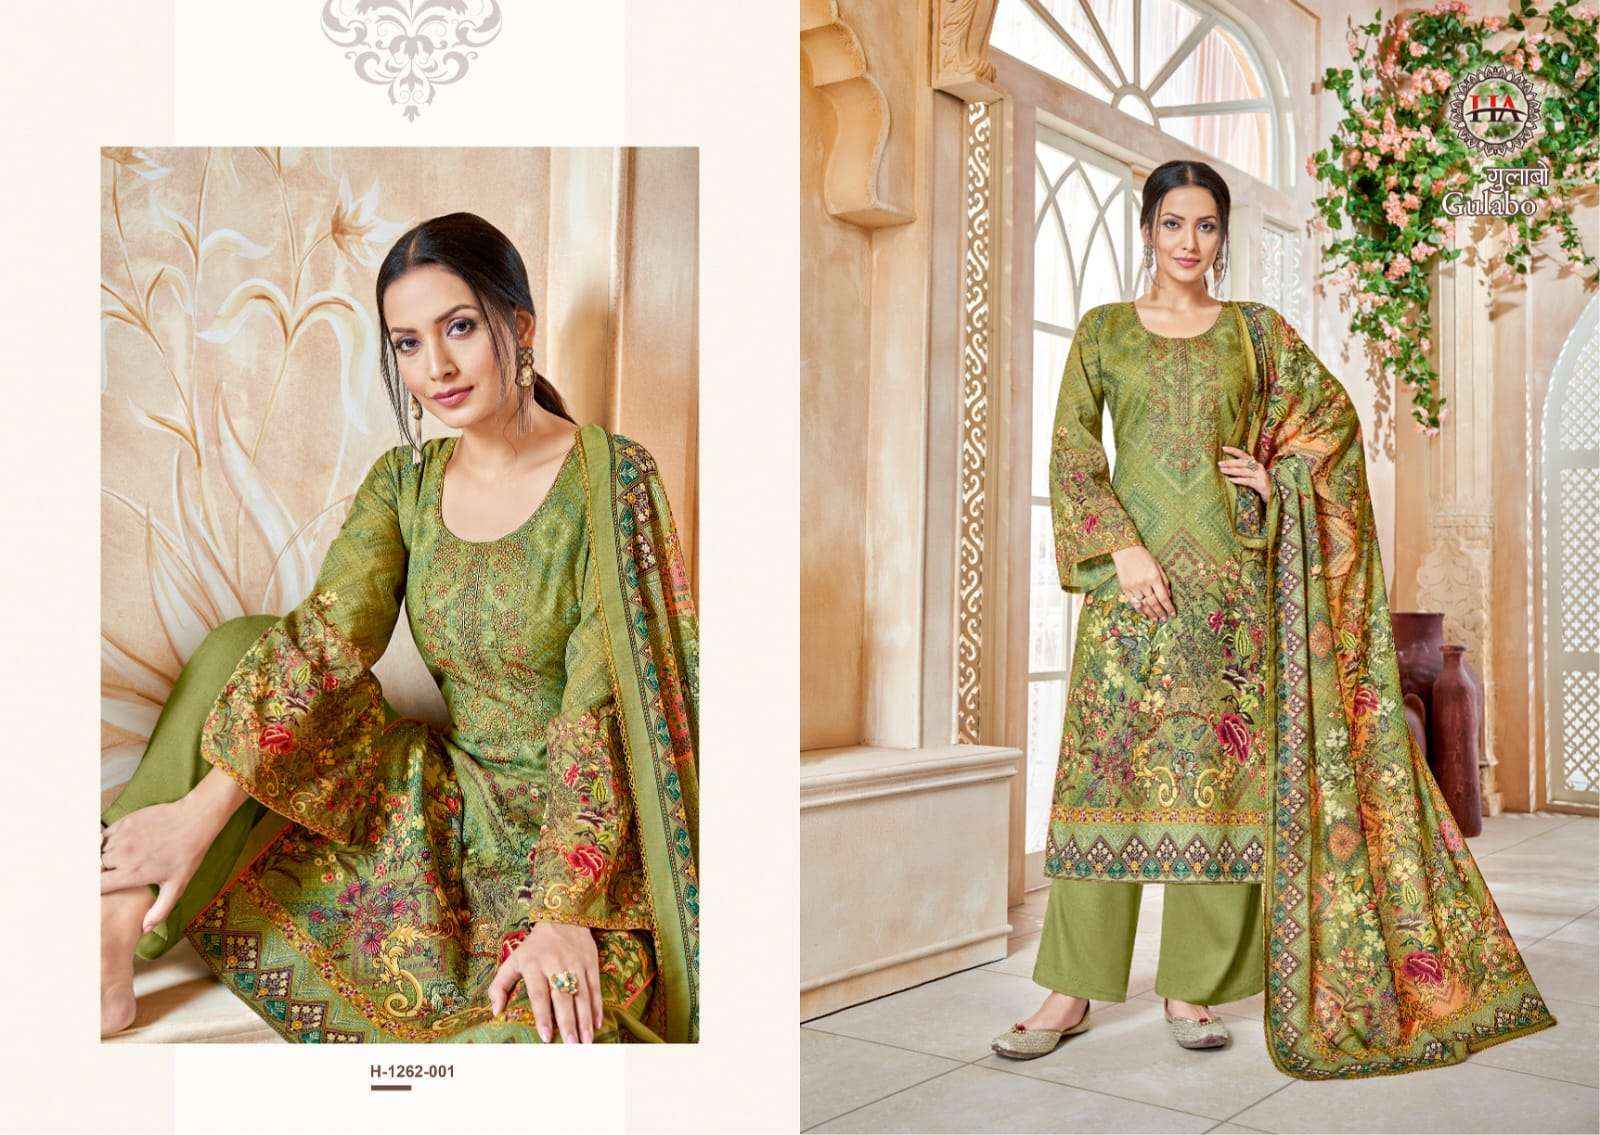 Harshit Fashion Gulabo Cotton Dress Material 8 pcs Catalogue